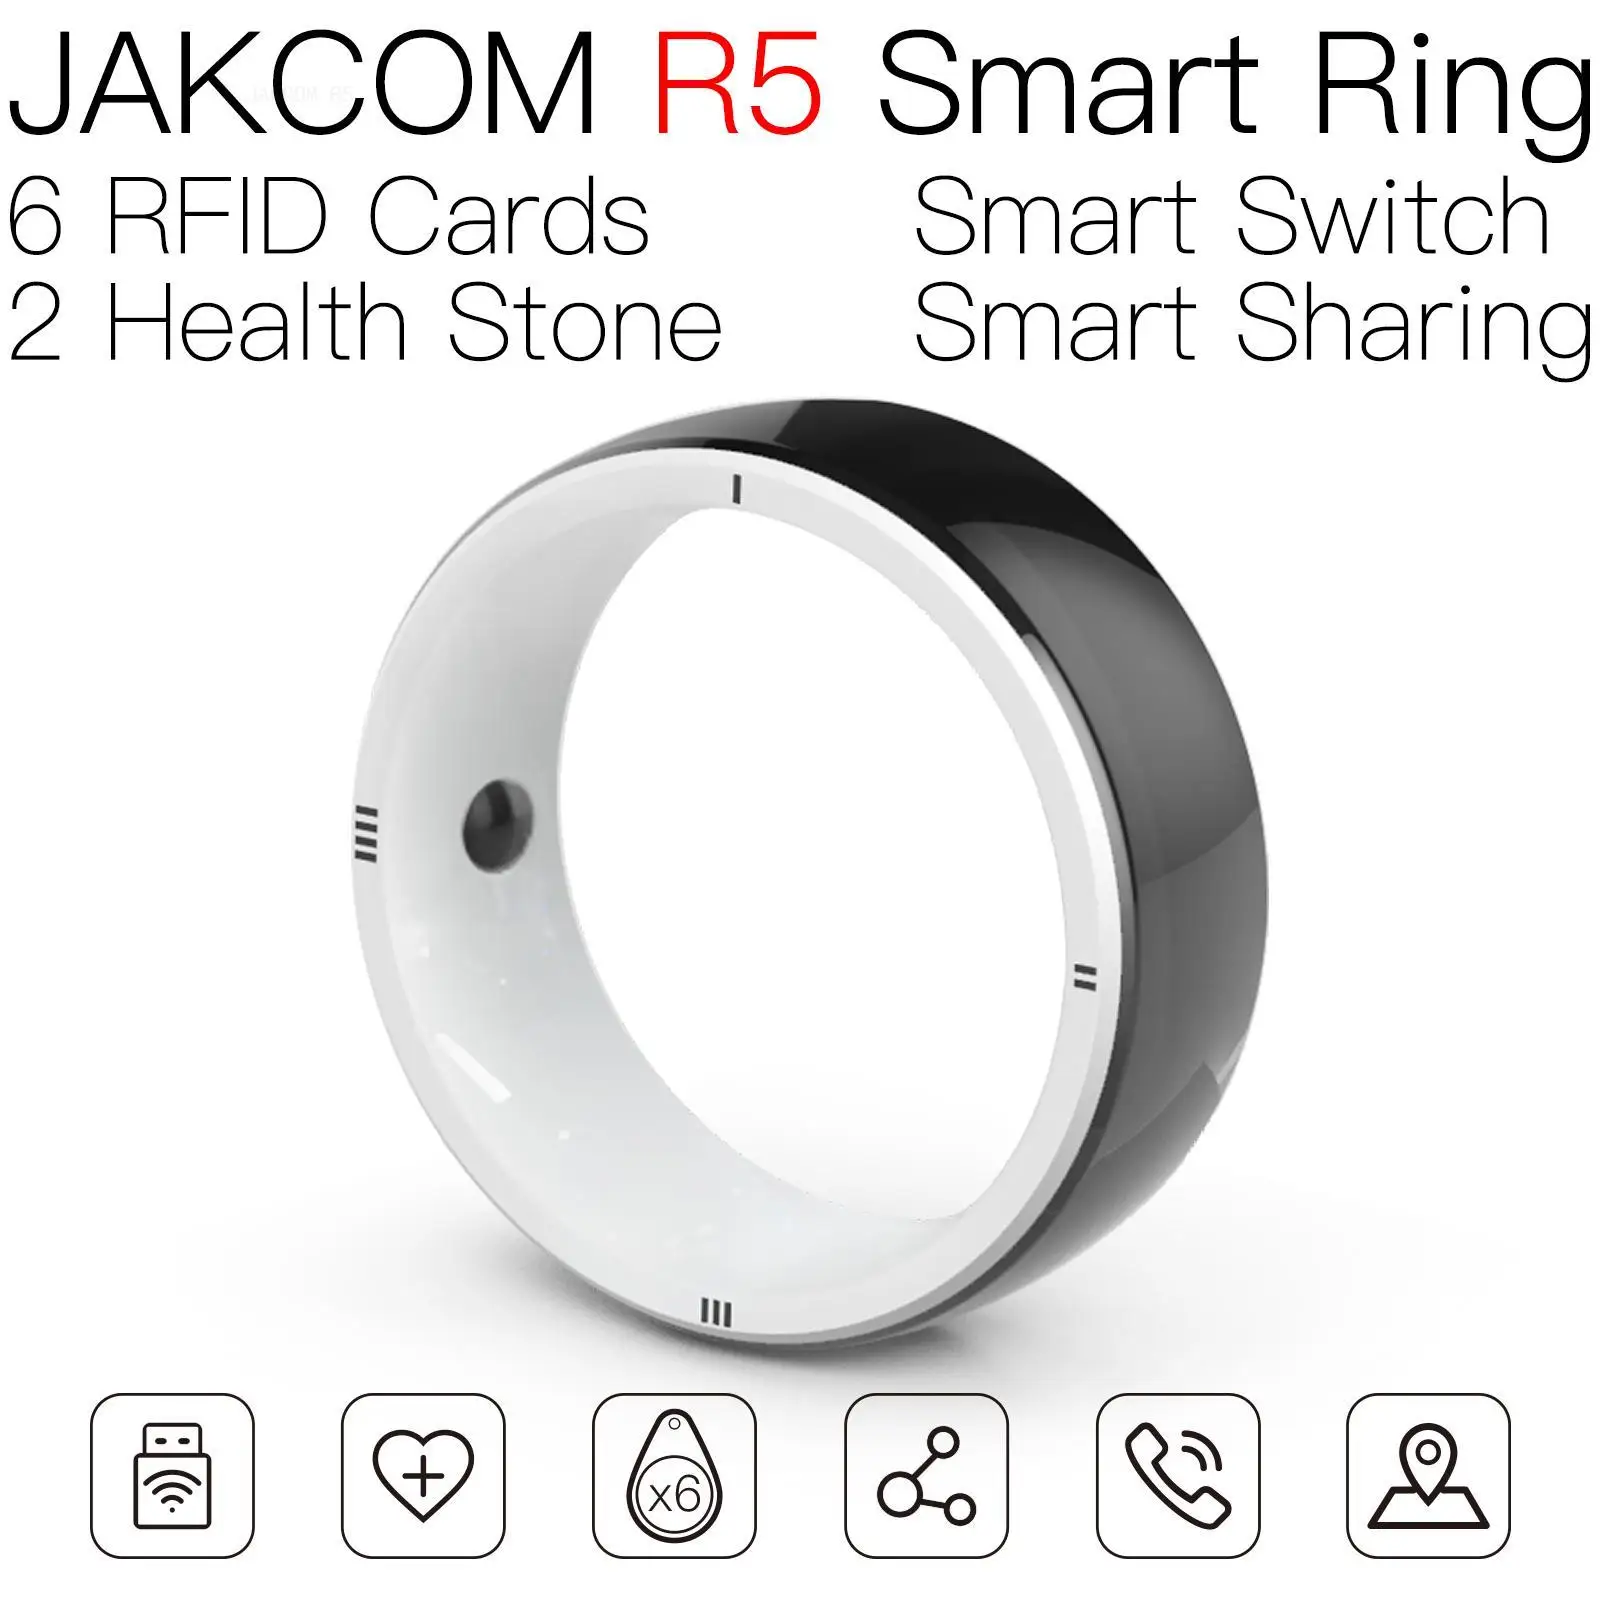 

JAKCOM R5 Smart Ring Nice than rfid ev2 animals tags 125 s50 7 bytes empty tag paramount plus anti mini em4100